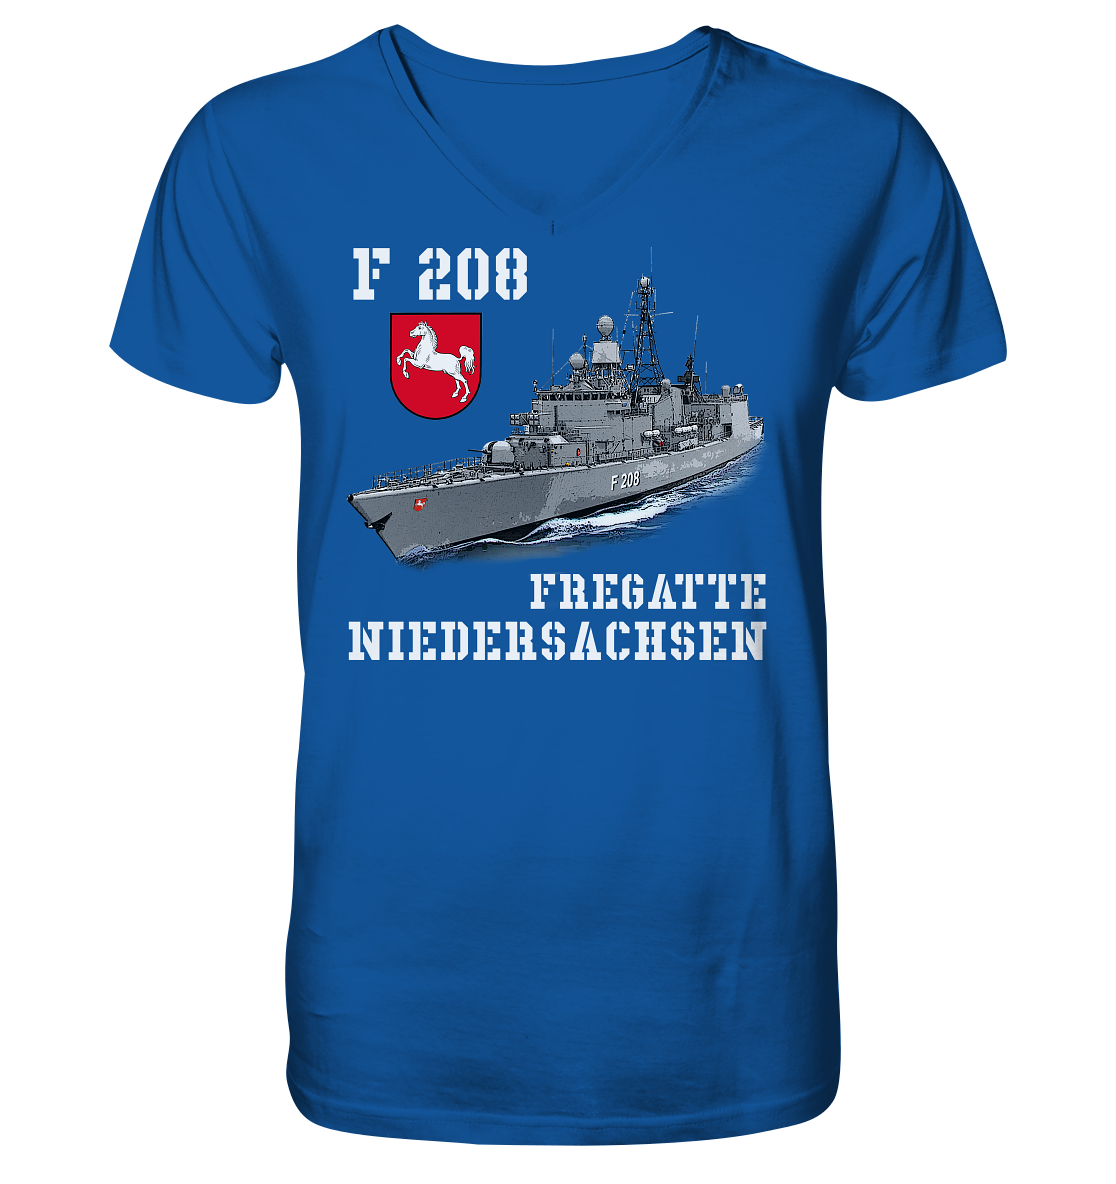 F208 Fregatte NIEDERSACHSEN - Mens Organic V-Neck Shirt